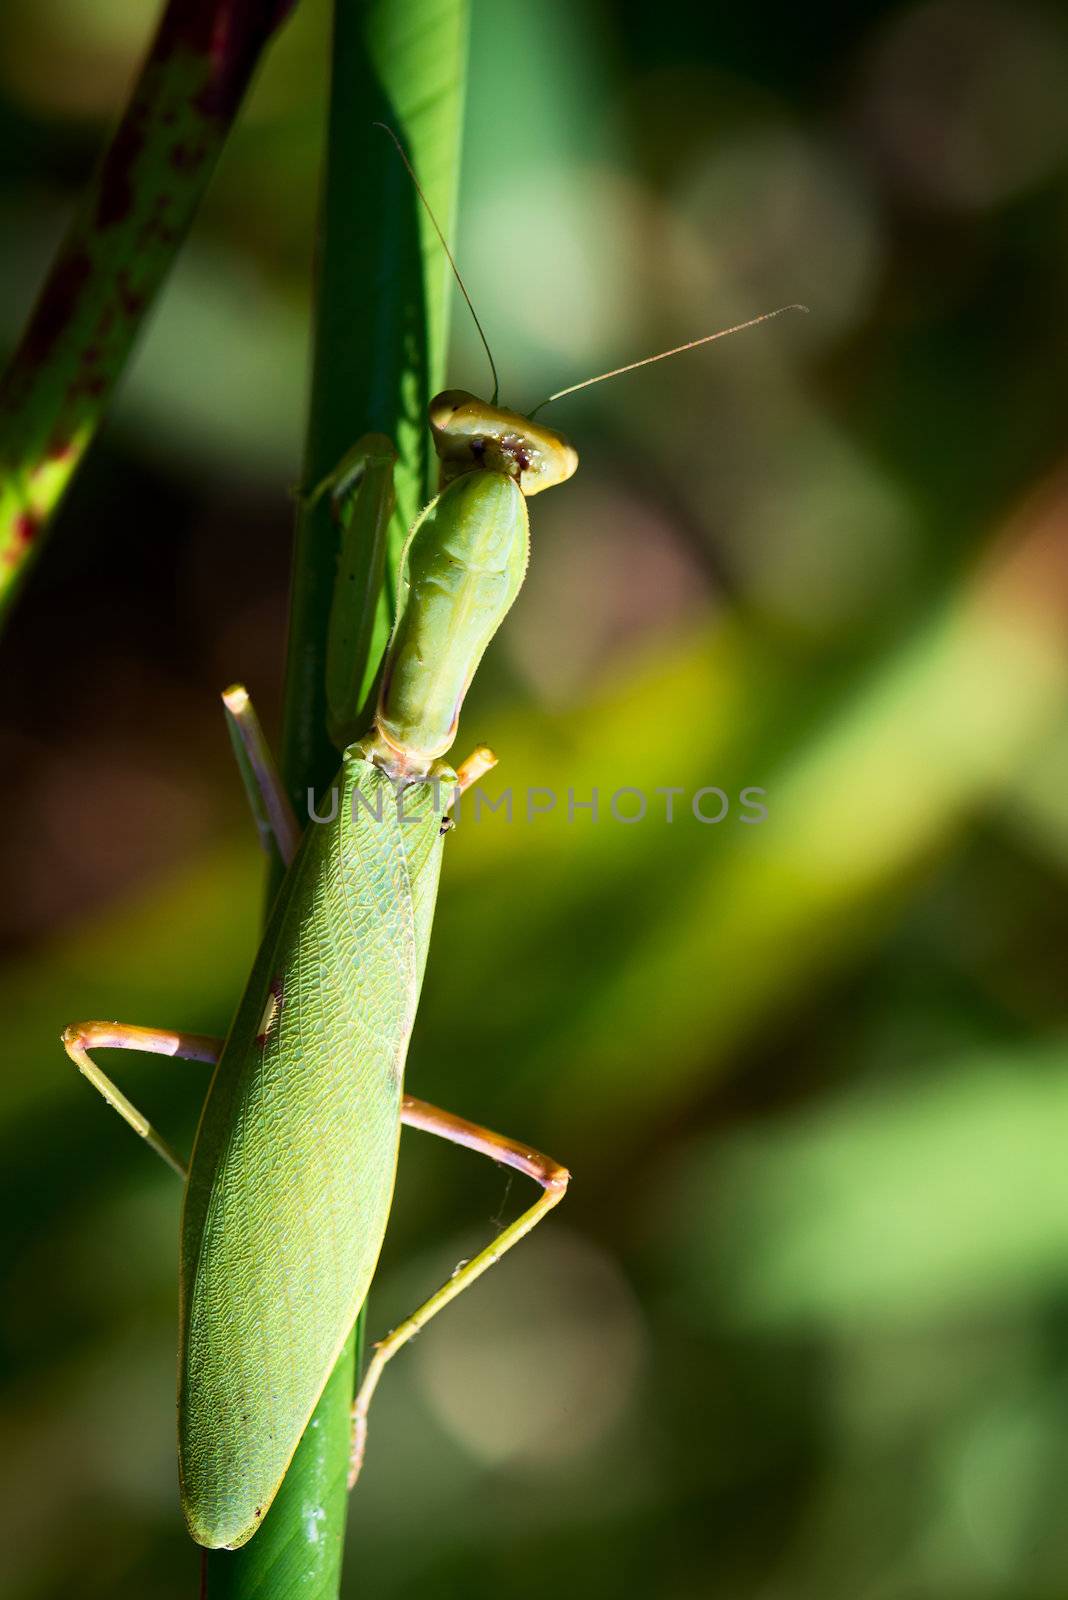 Mantis in green leaves, selective focus on predator's eyes